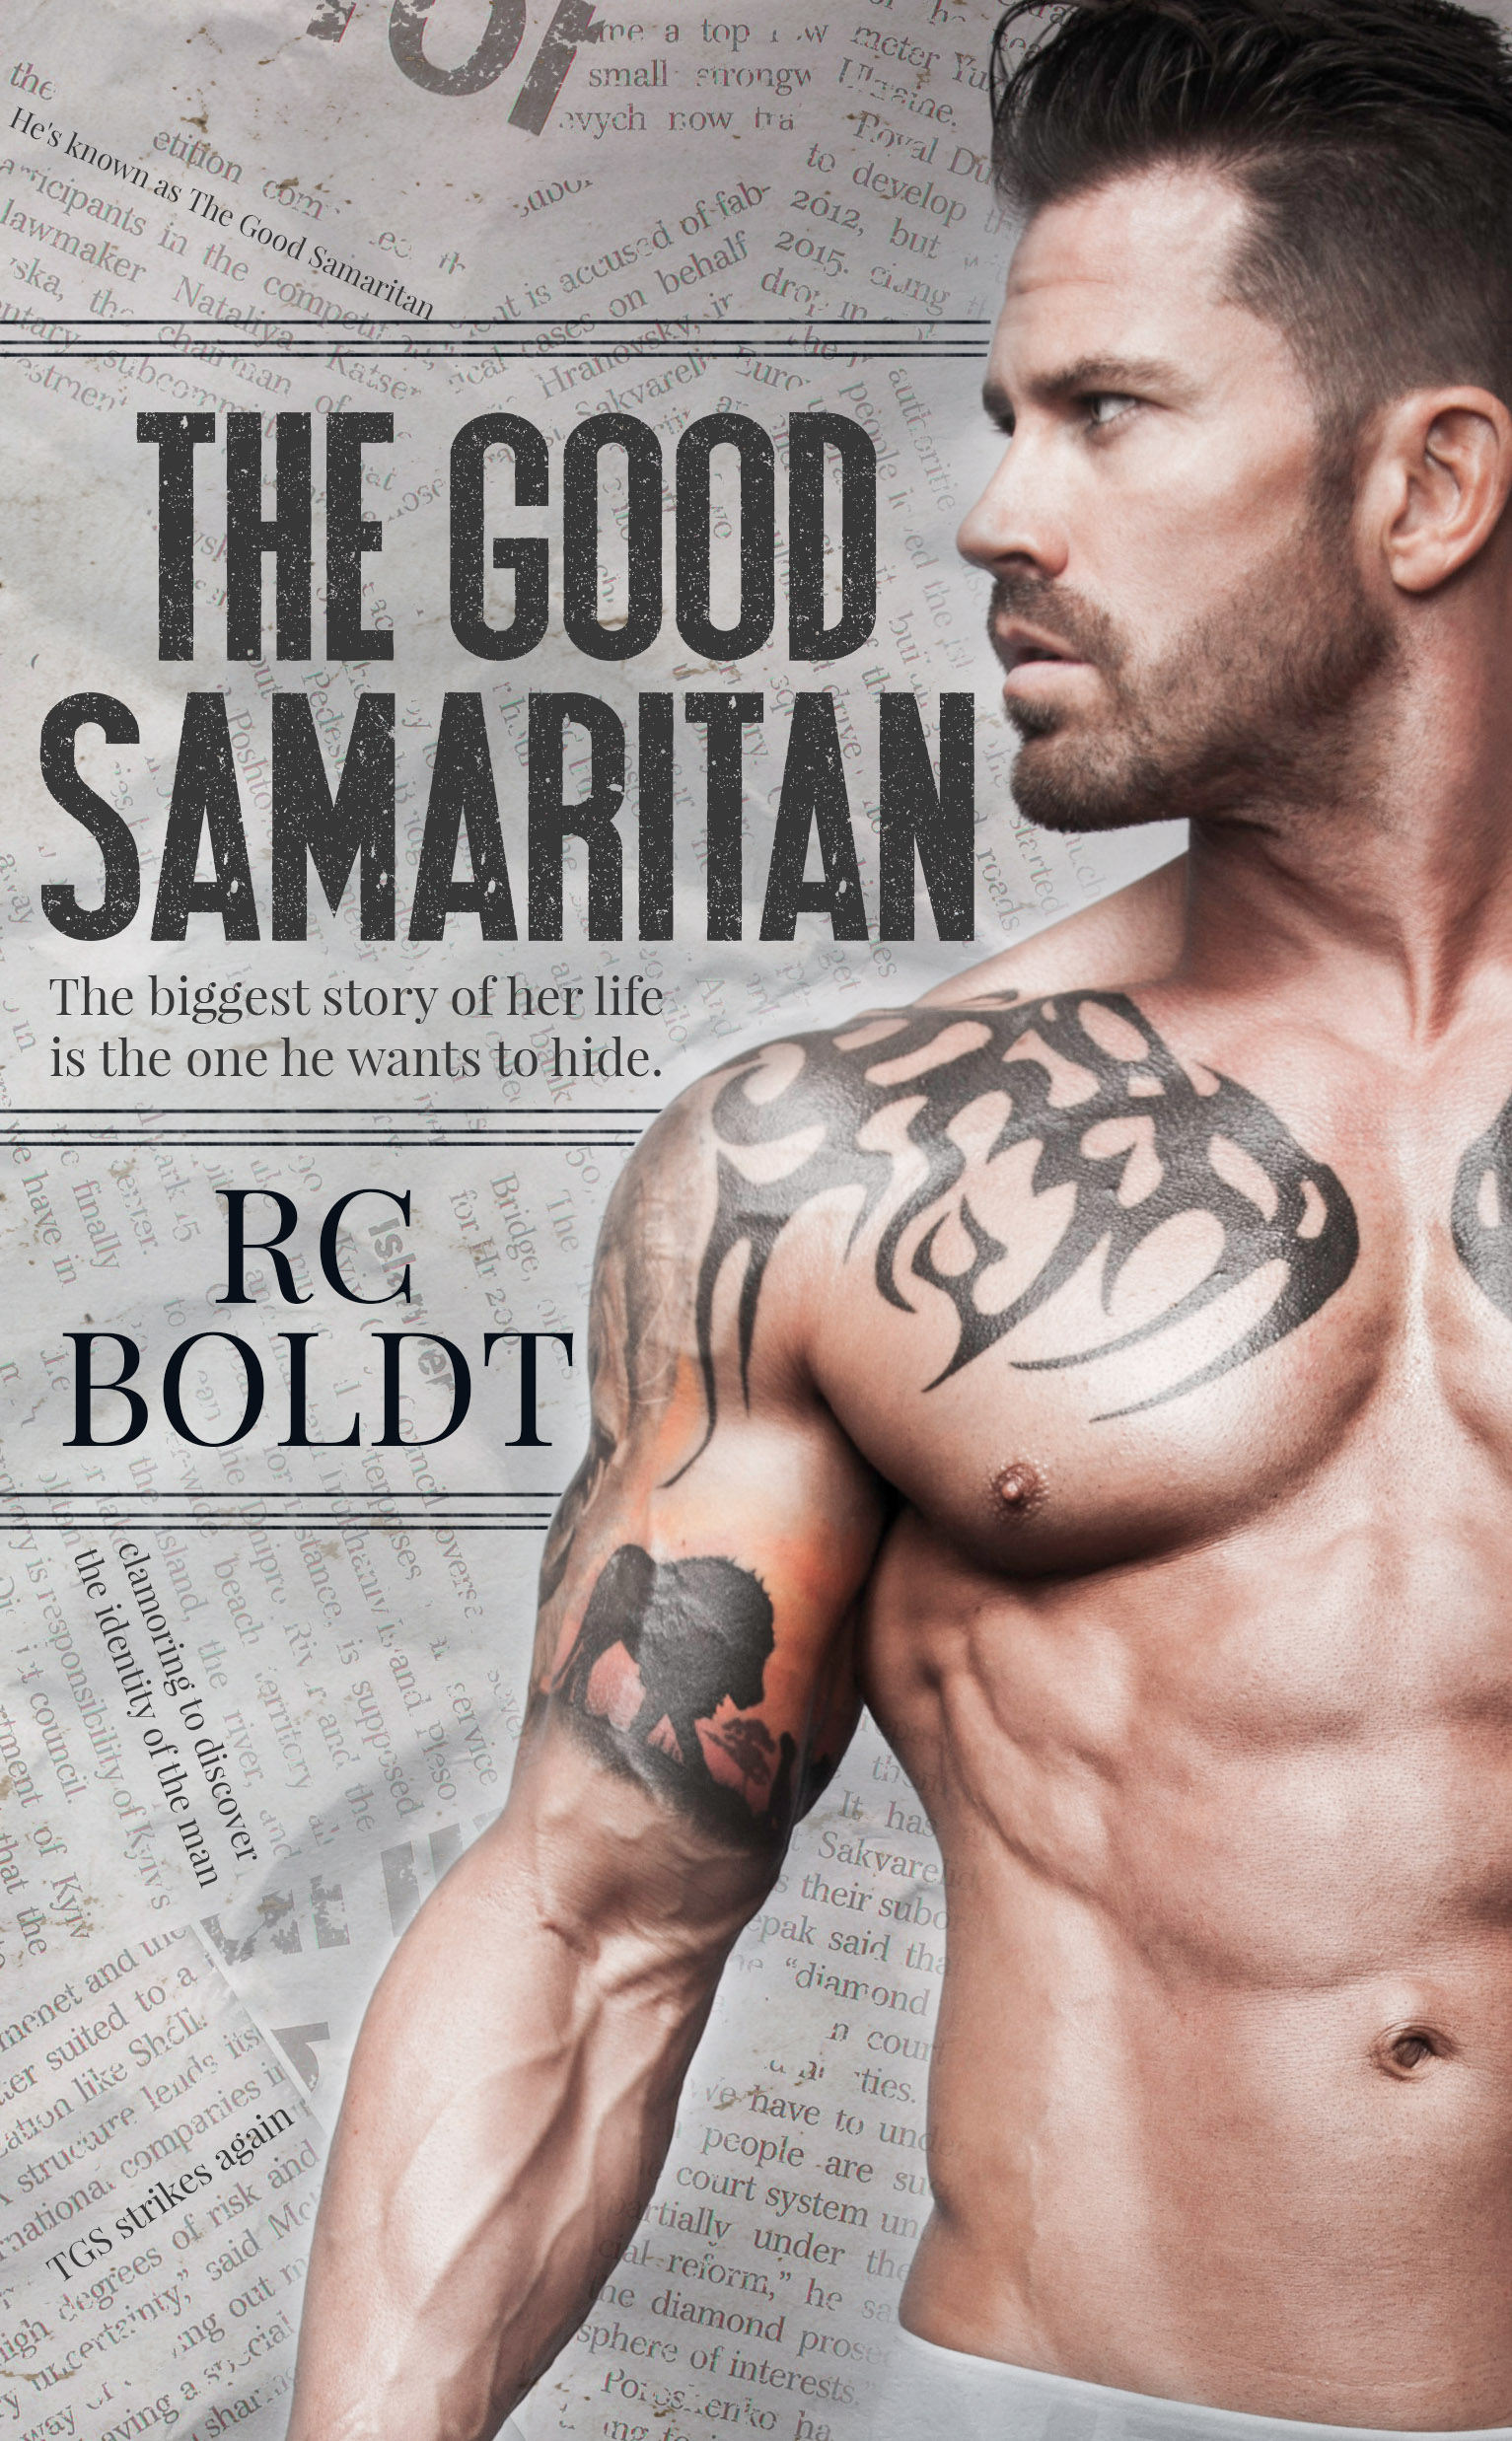 The Good Samaritan by R.C. Boldt [Review]